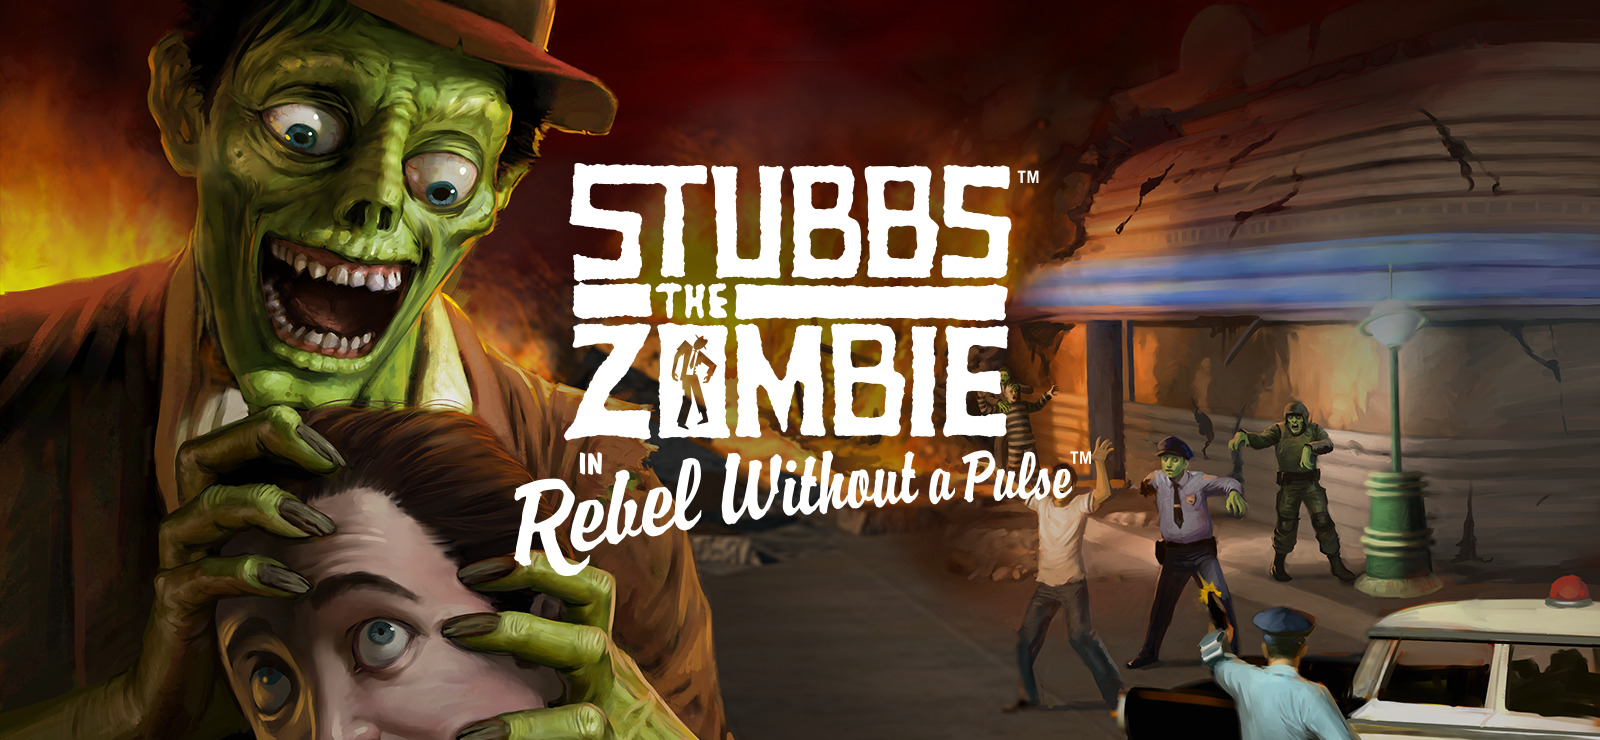 stubbs the zombie pc full game